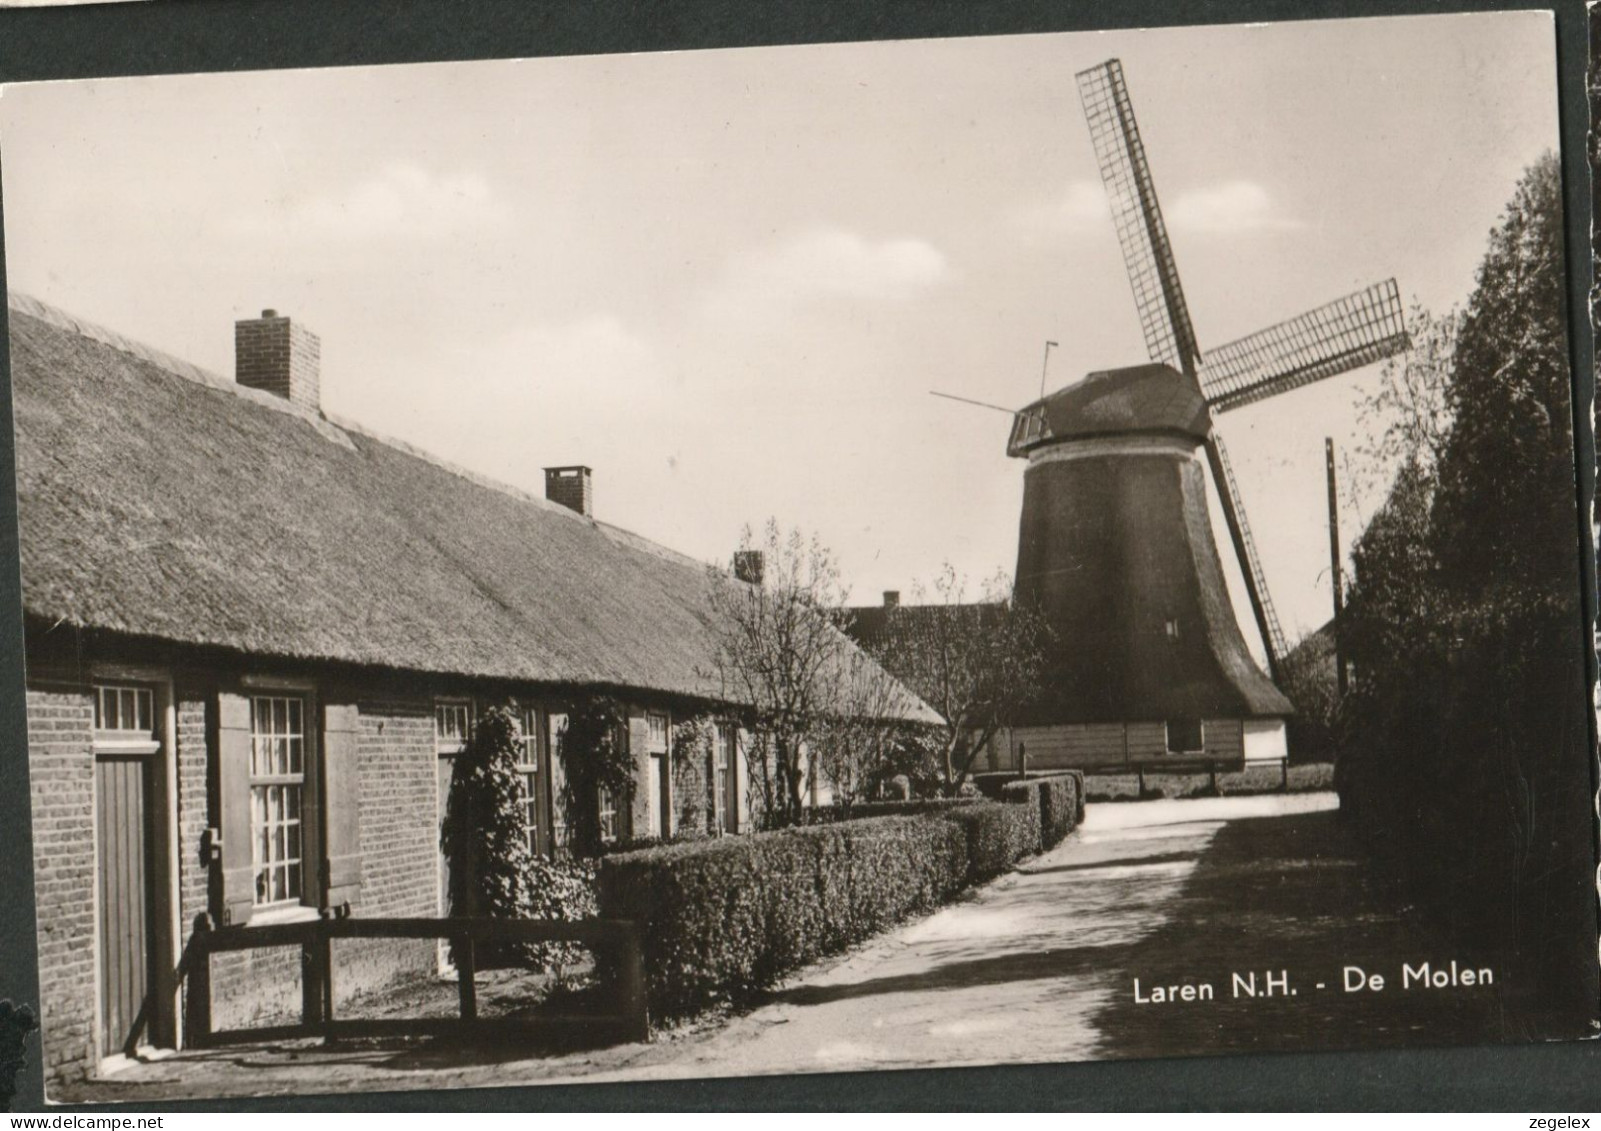 Laren N.H ~1956. - De Molen - Windmill - Laren (NH)